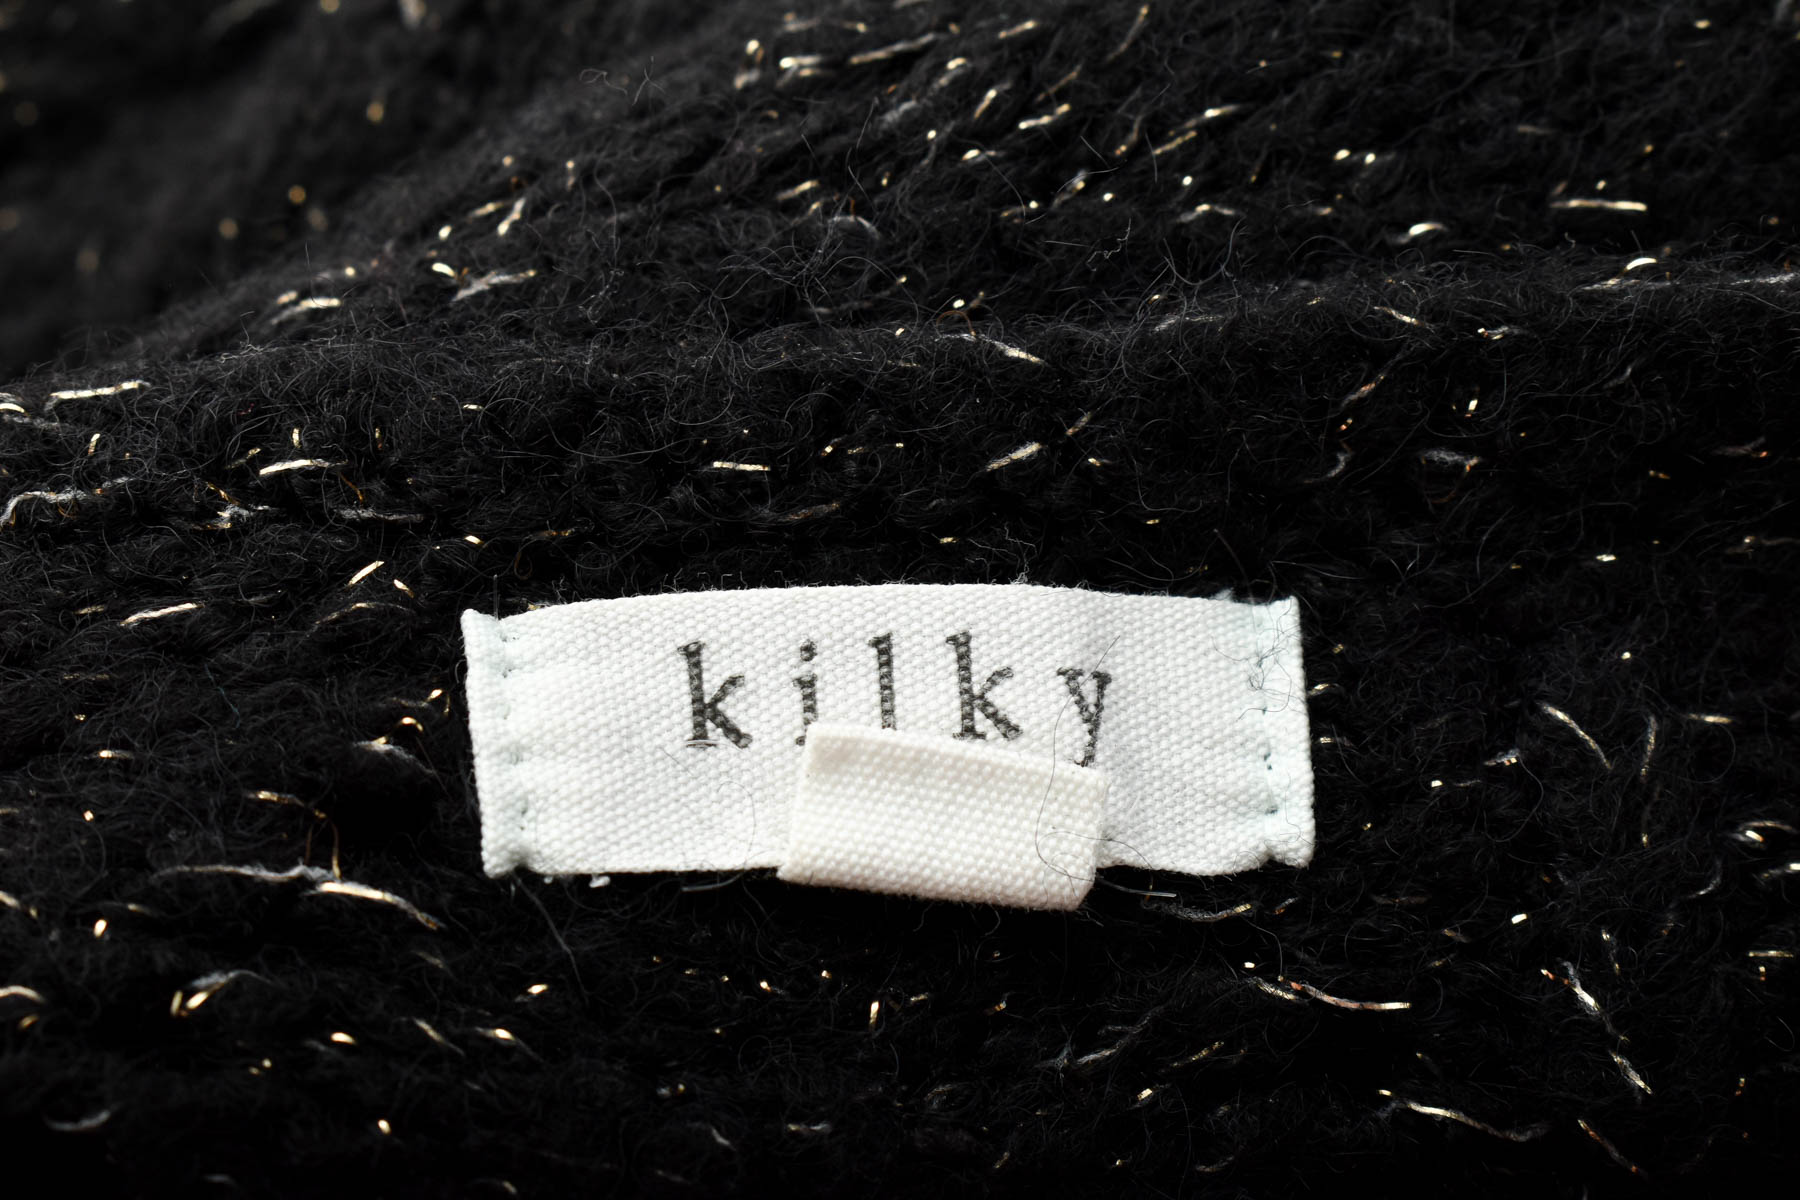 Dress - Kilky - 2